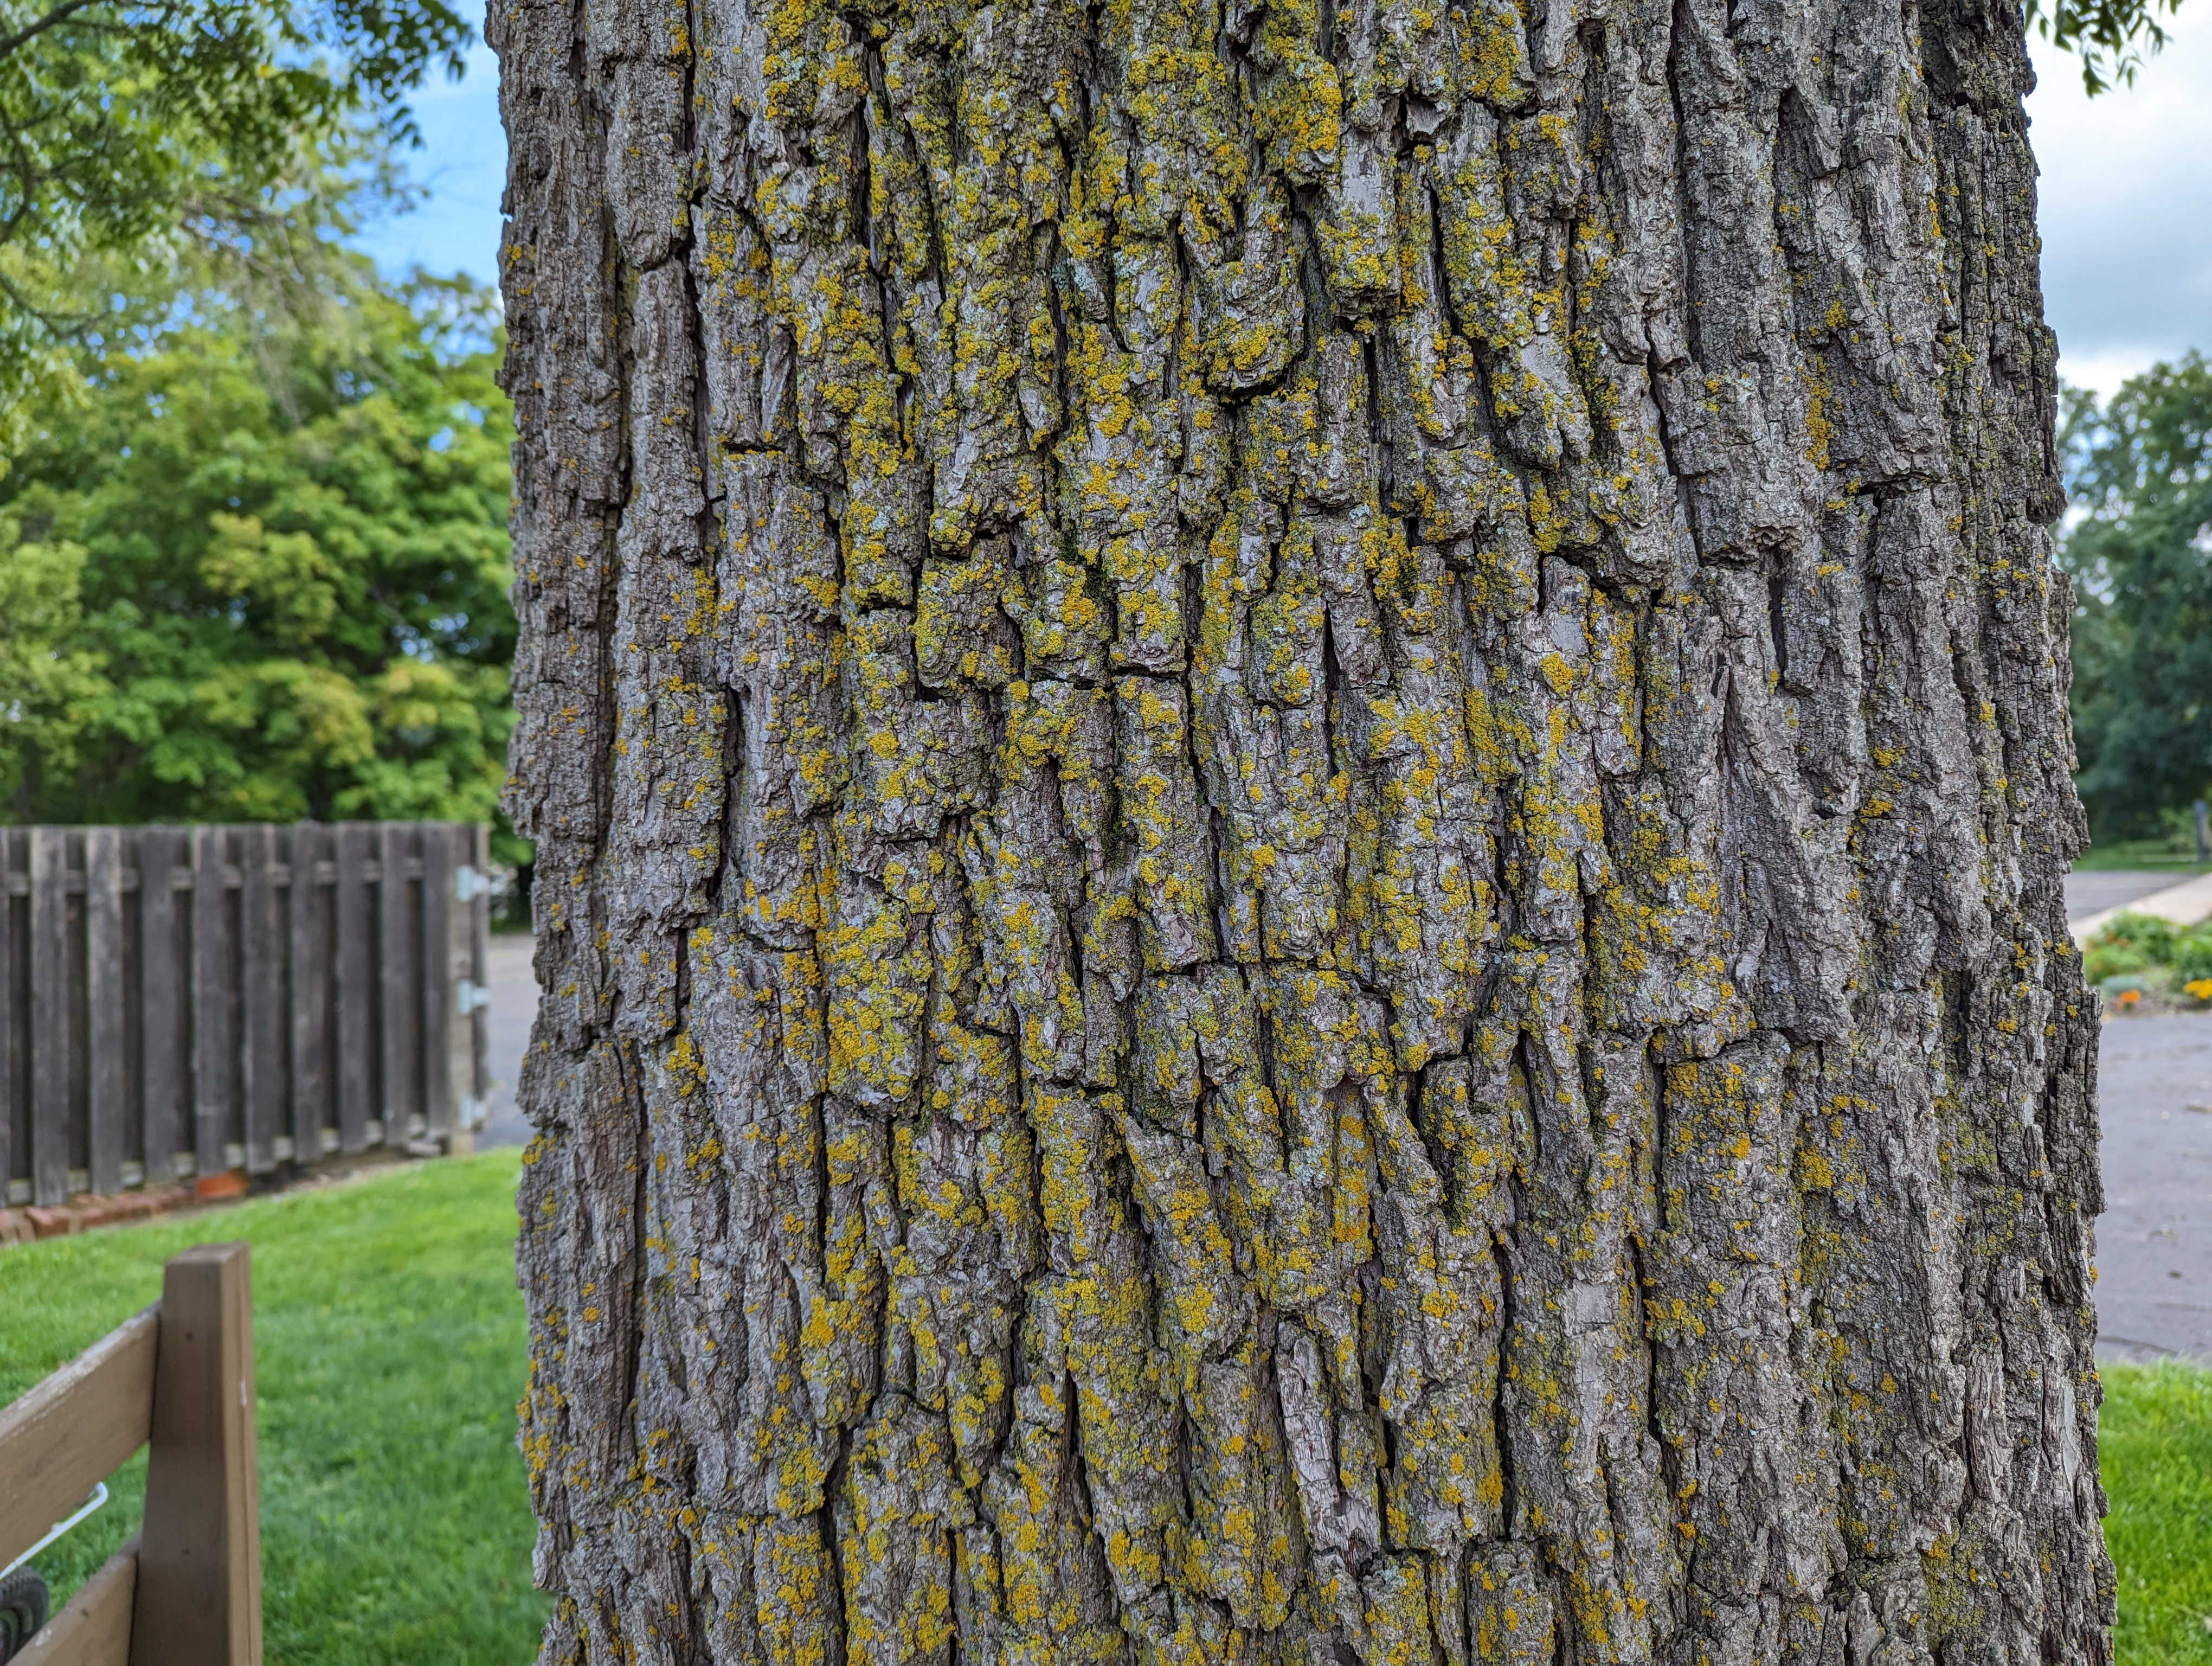 Black walnut bark on a mature tree.